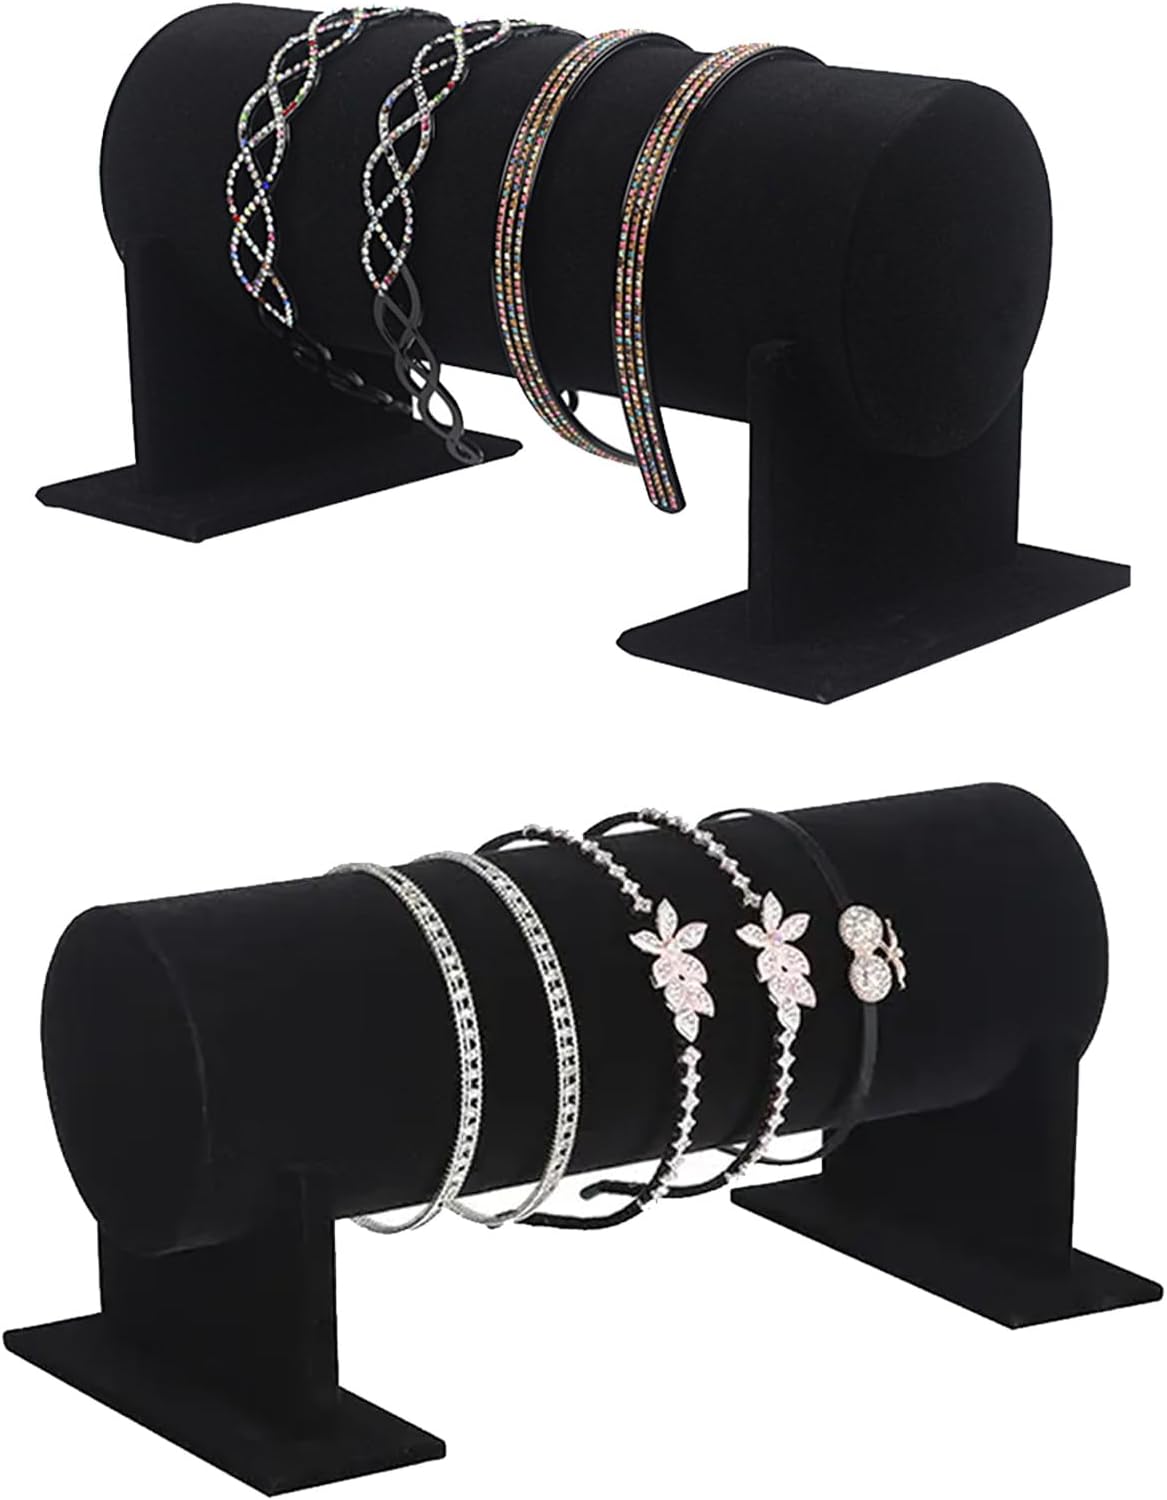 Acrux7 2 Pack Black Velvet Headband Holder Organizer for Girls and Women, 12 inch Detachable Headband Display Stand, Bracelet Storage Organizer for Jewelry, Bracelets, Hair Accessories, Hairband